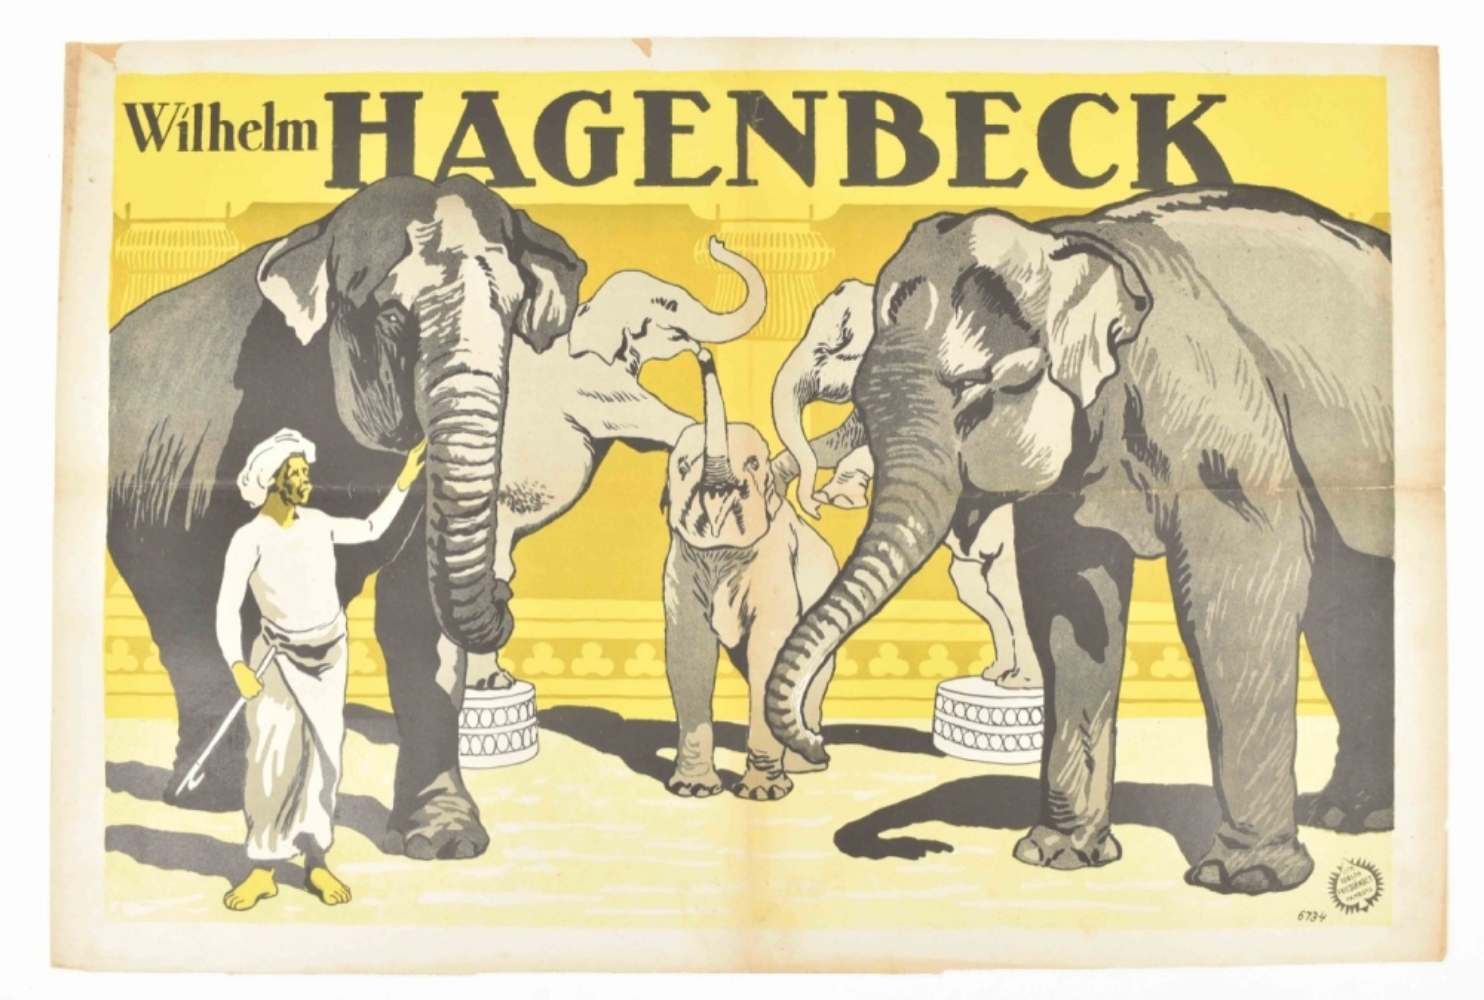 [Animal Dressage] Circus Hagenbeck. Dressage act of elephants" Friedländer, Hamburg, 1919